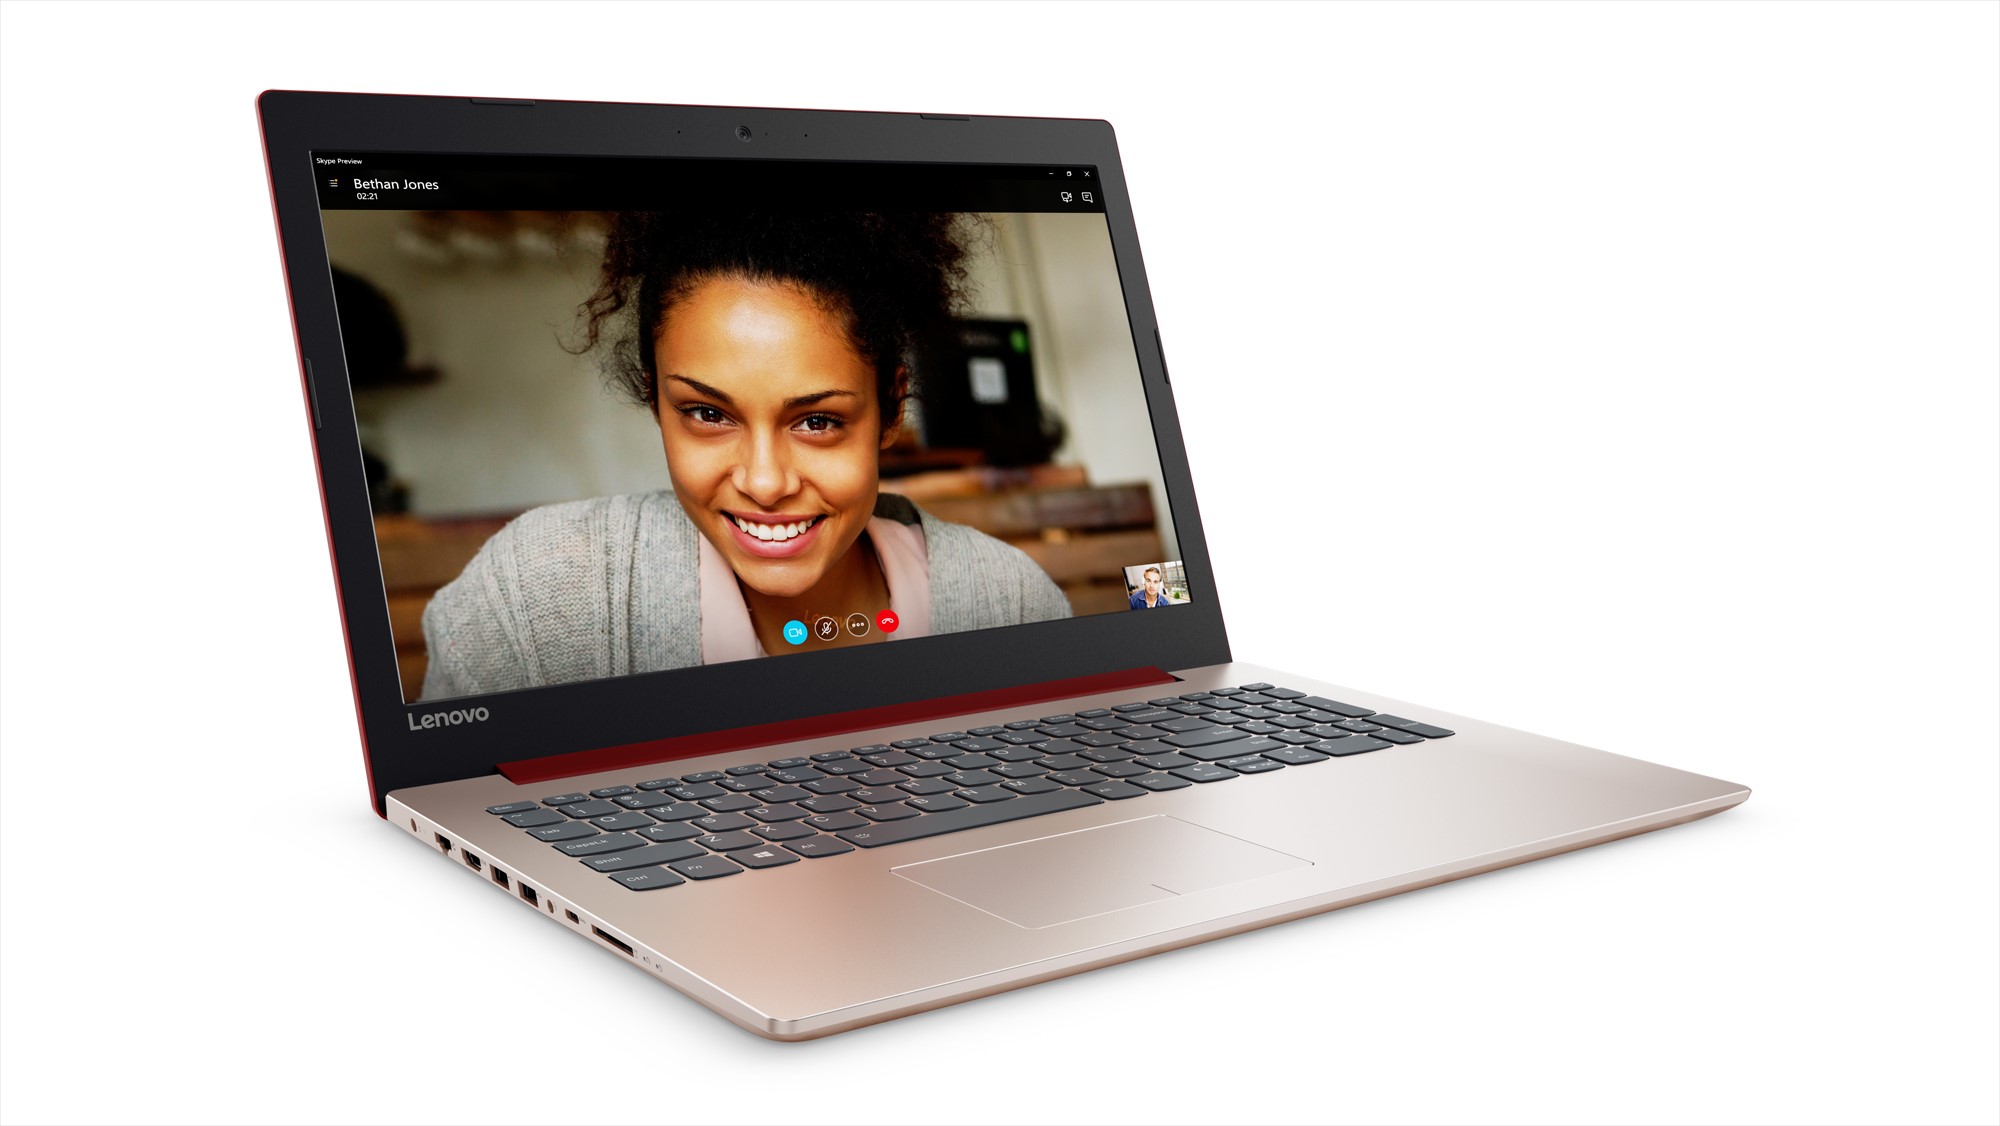 Lenovo 81DE00T0US ideapad 330 15.6" Laptop, Intel Core i3-8130U, 4GB RAM, 1TB HDD, Win 10, Coral Red - image 1 of 6